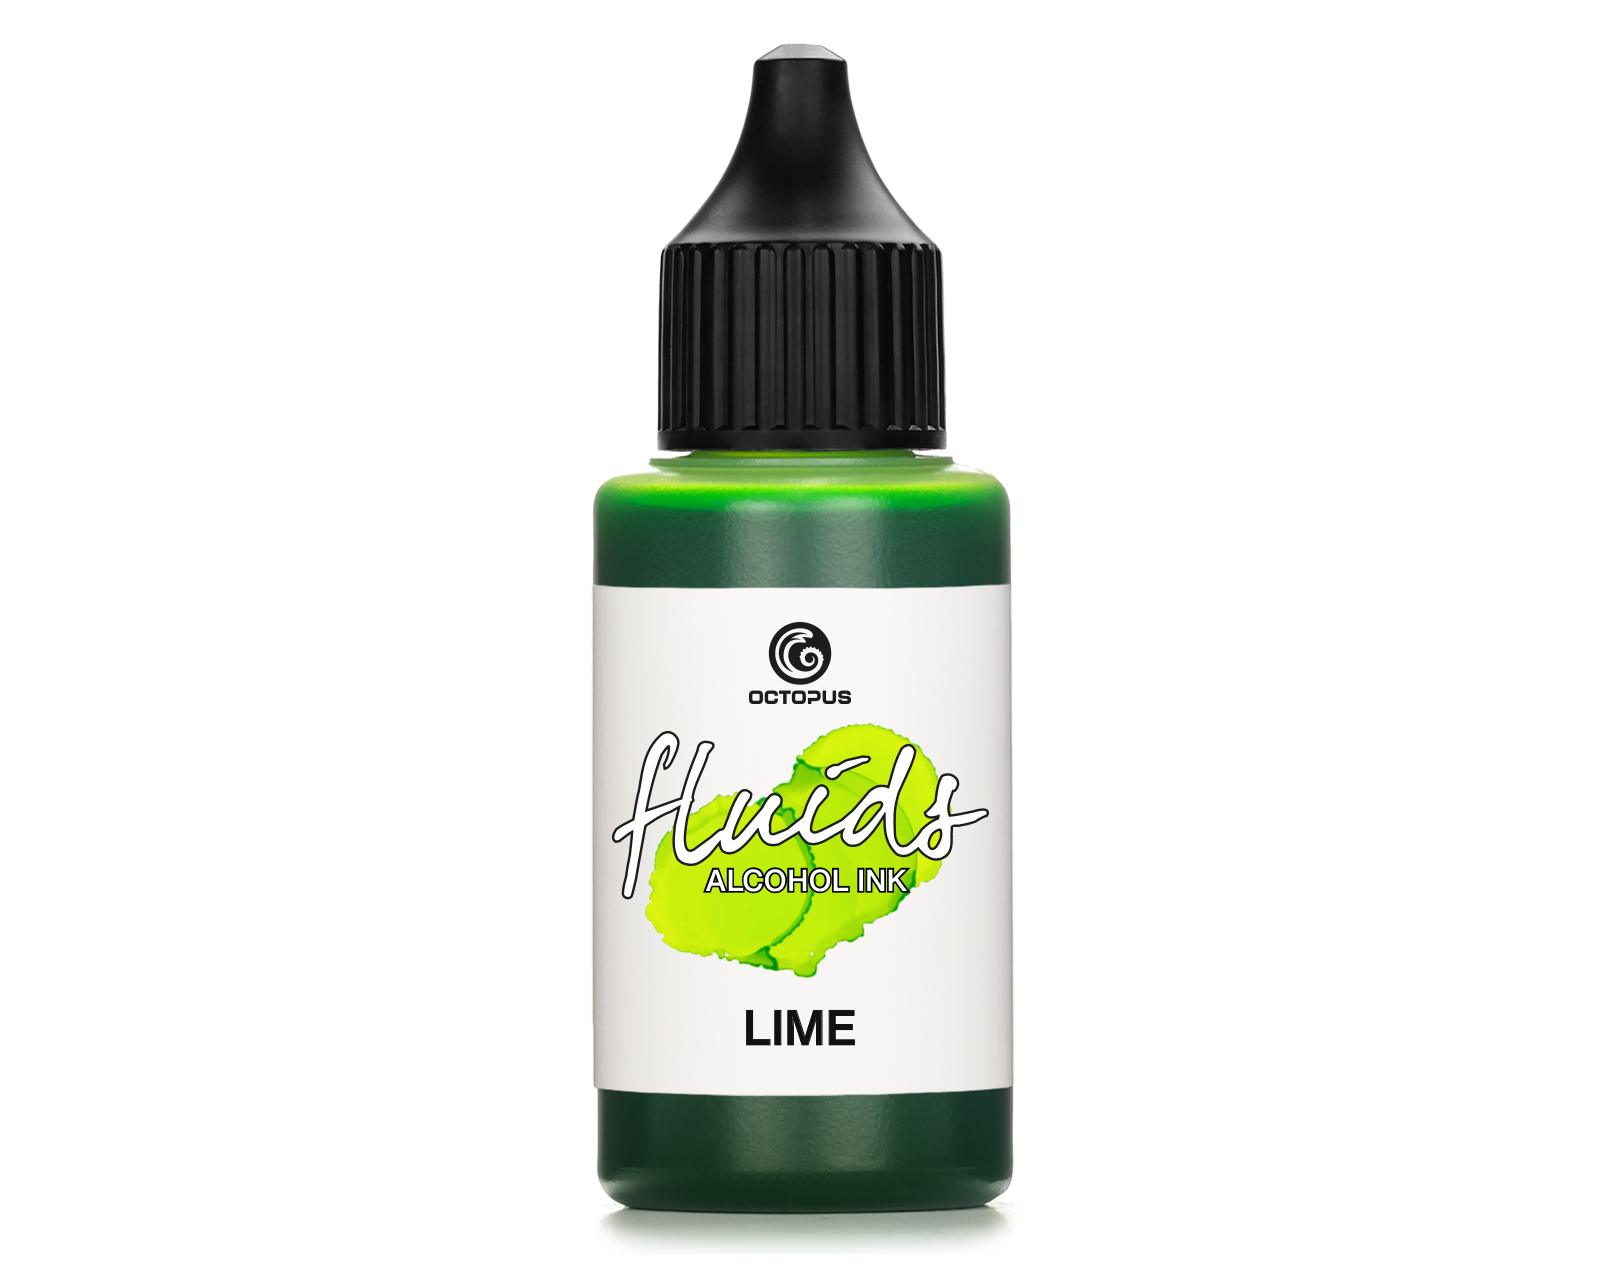 Fluids Alcohol Ink LIME, Alkoholtinte für Fluid Art und Resin, grün